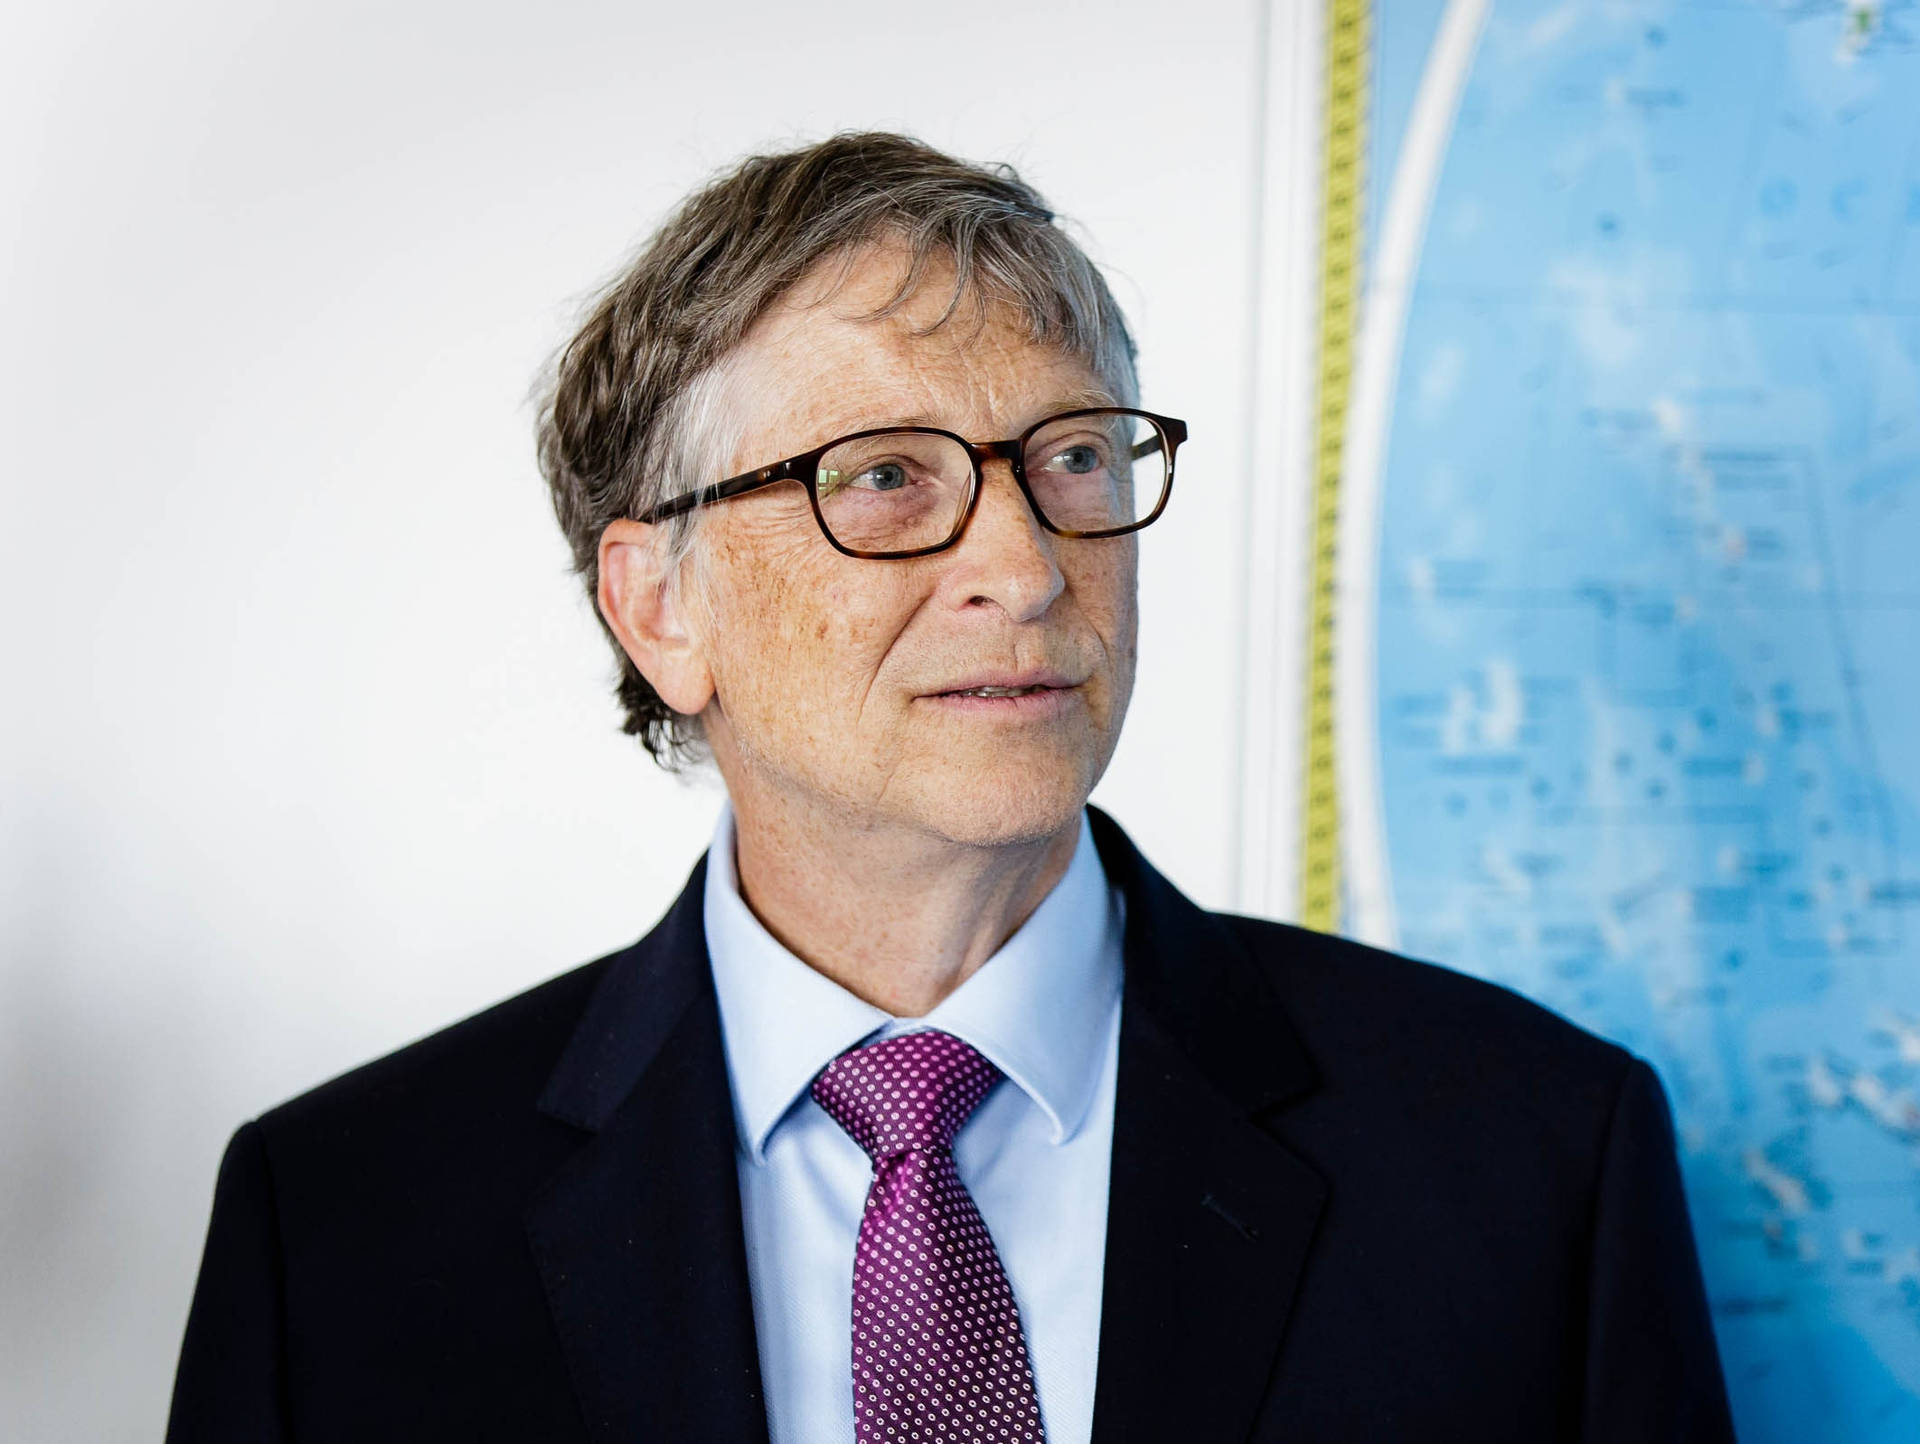 Bill Gates In Black Suit Background